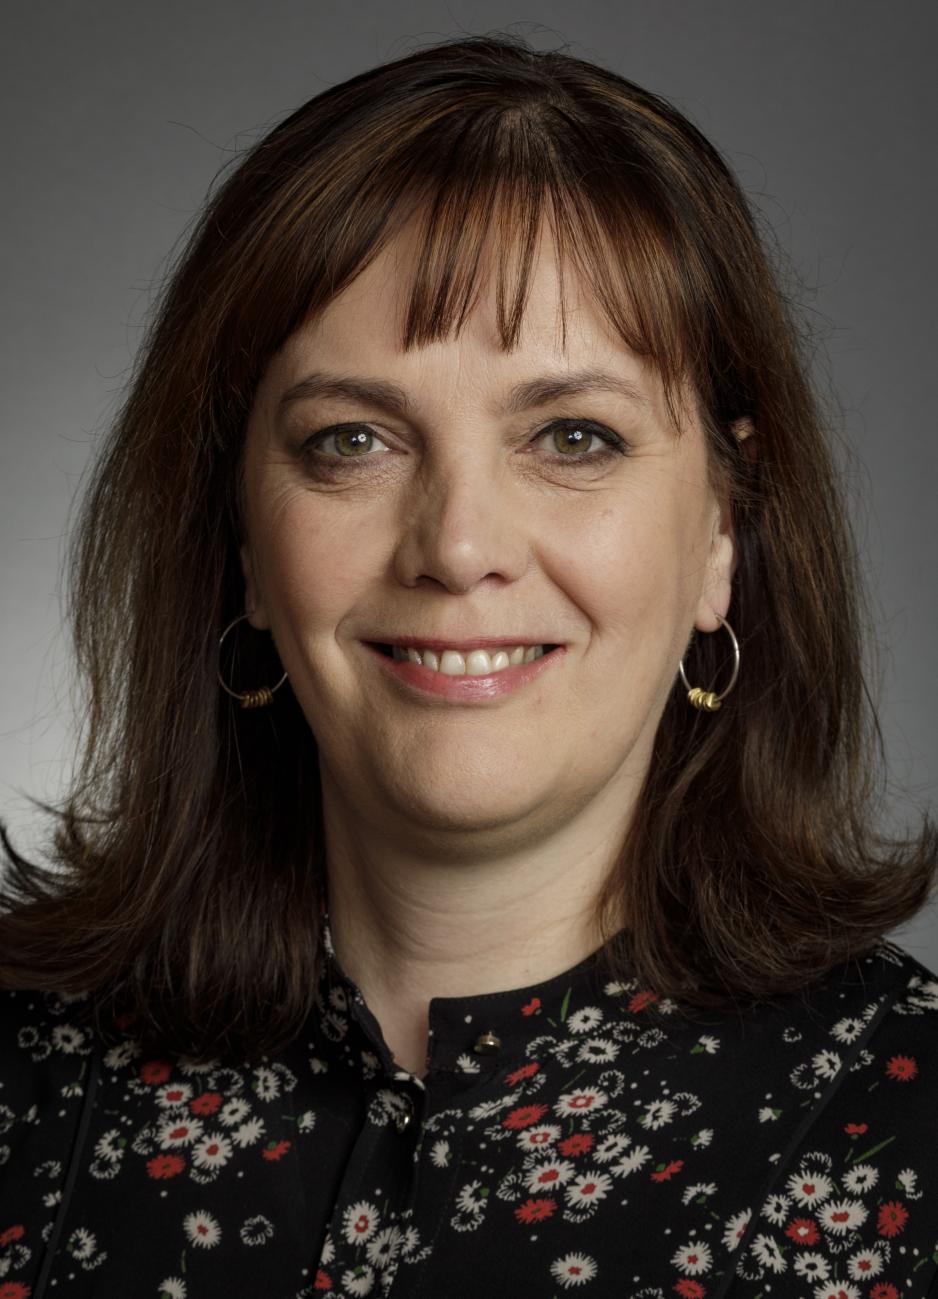 Svandis Svavarsdottir, Minister of Health in Iceland. (Photo: Alltinget)